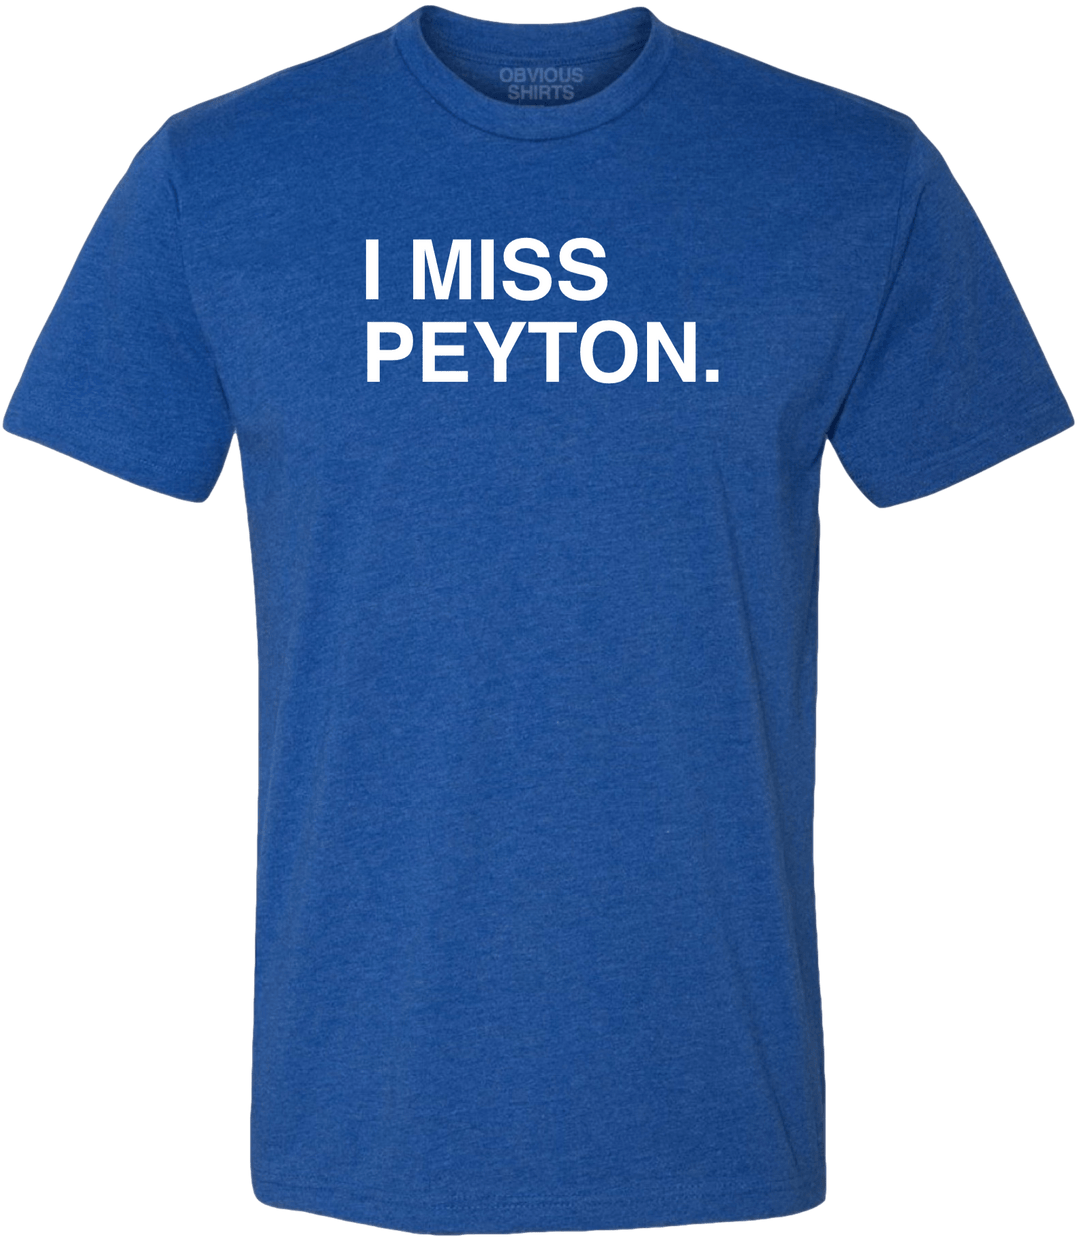 I MISS PEYTON. - OBVIOUS SHIRTS